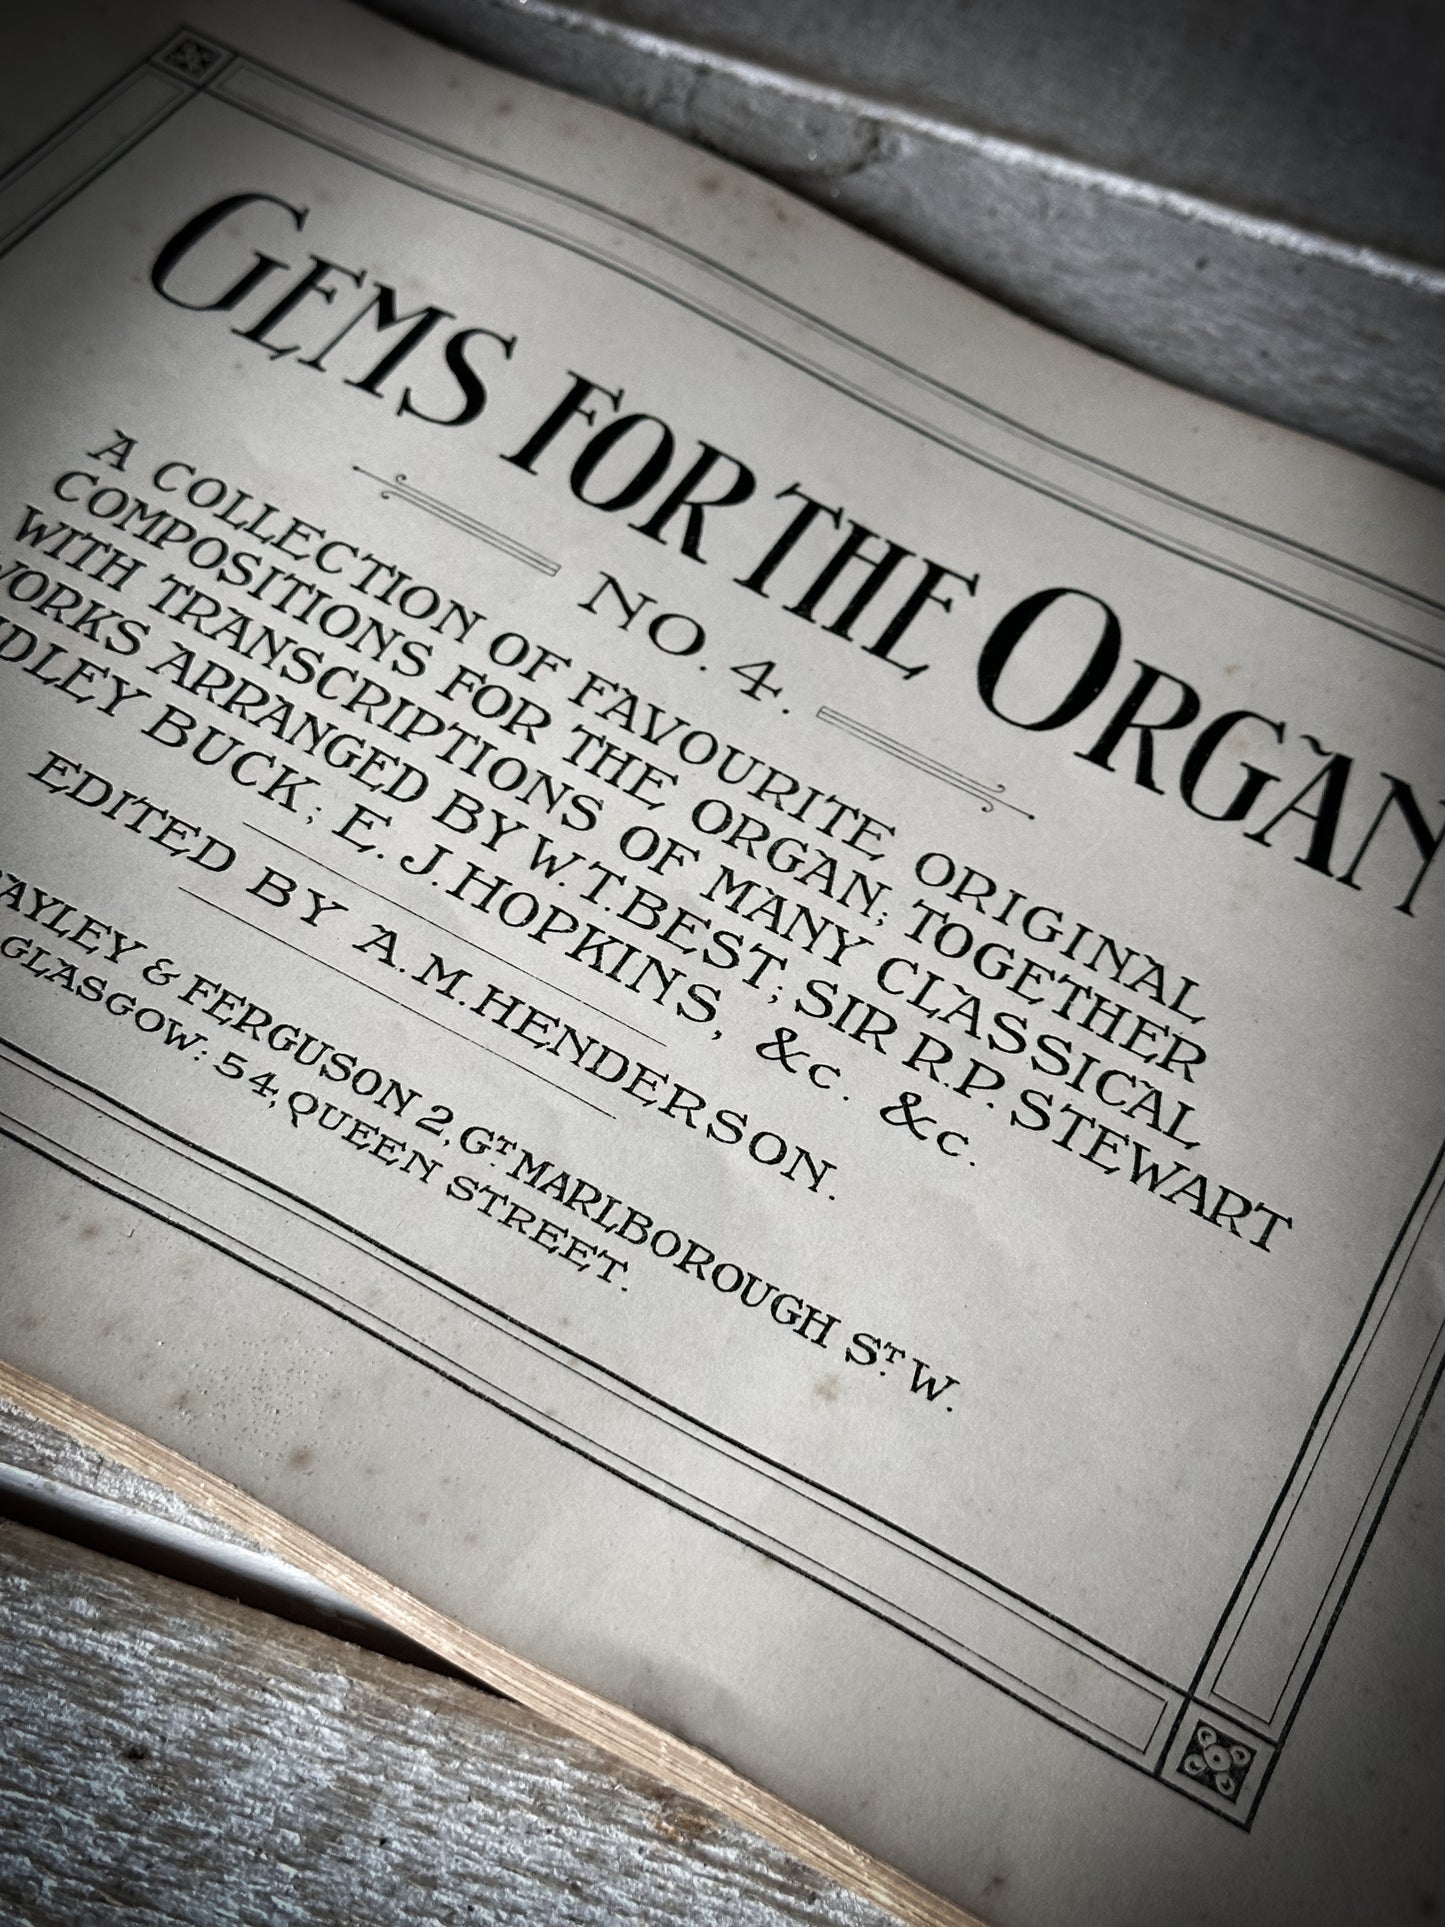 Gems for the Organ Hayley & Ferguson, London & Glascow music book